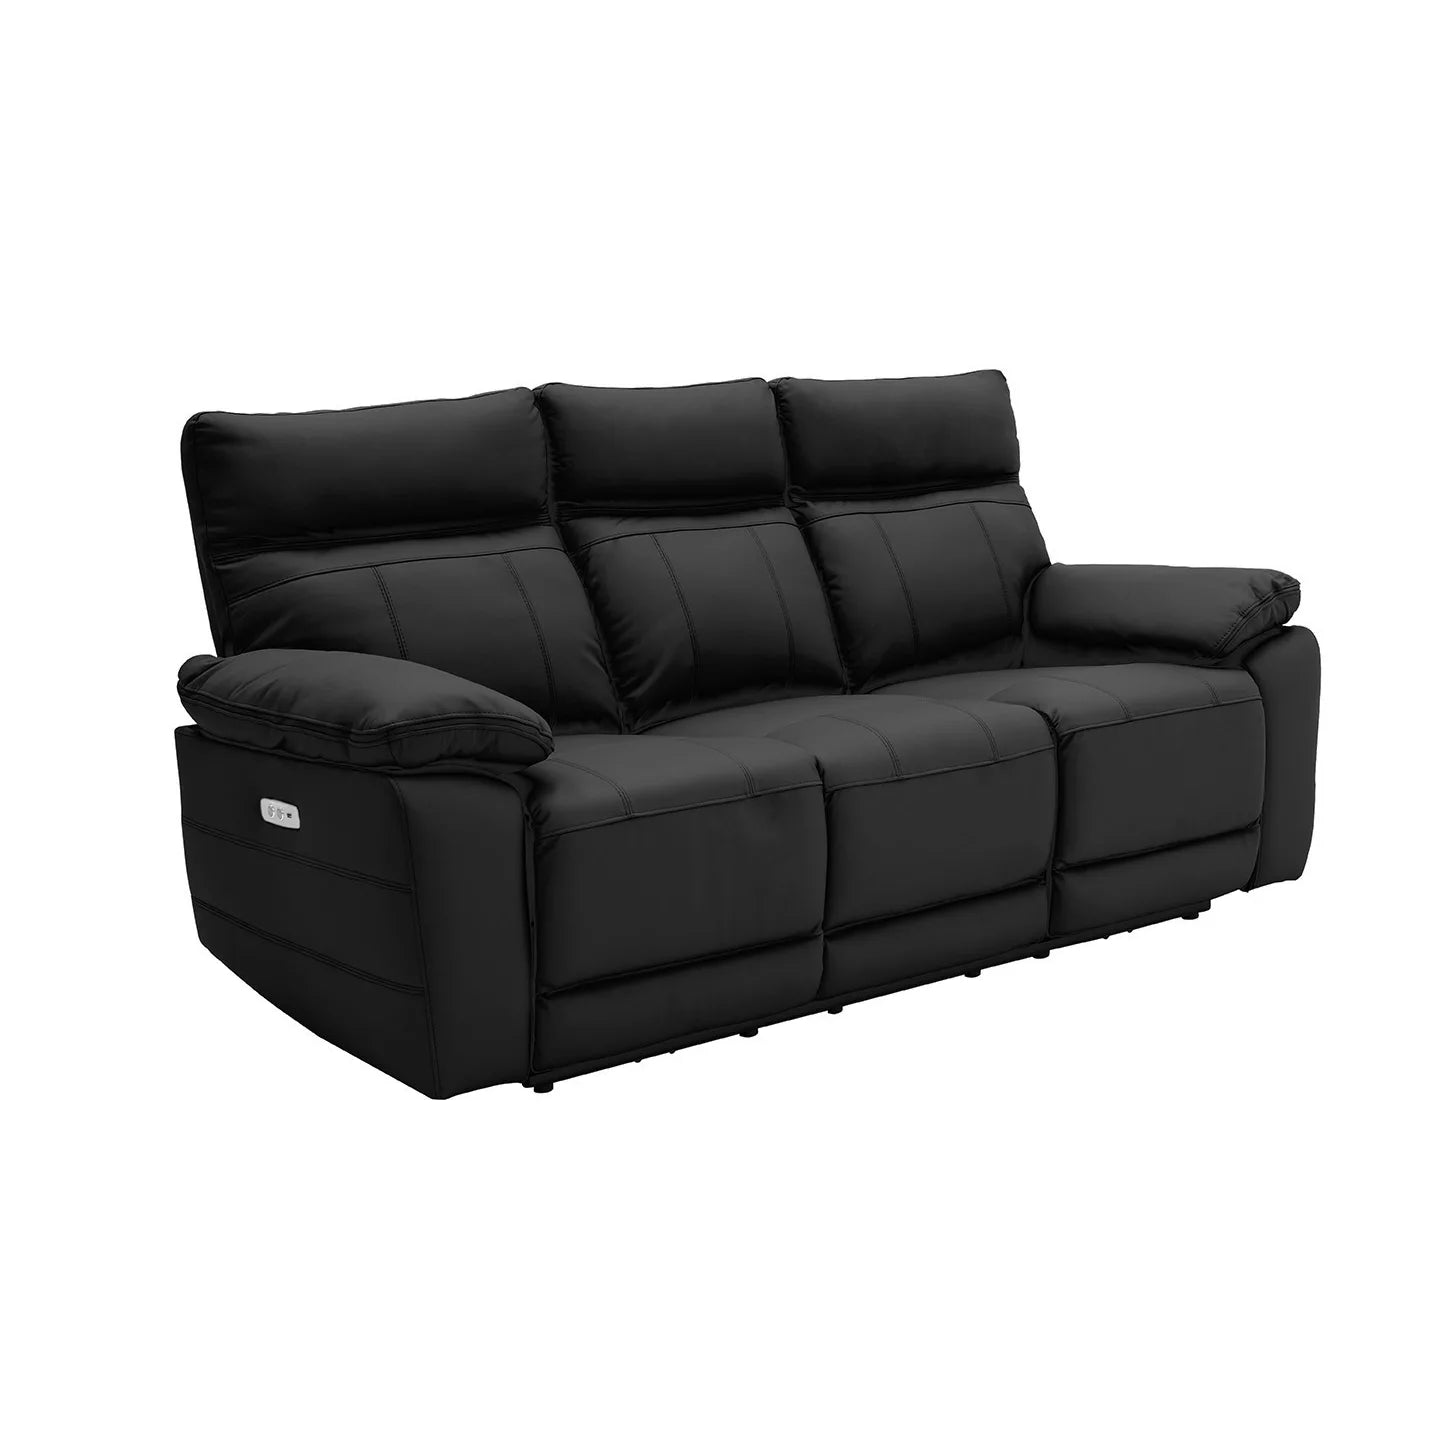 Positano Black Leather 3 Seater Electric Recliner Sofa